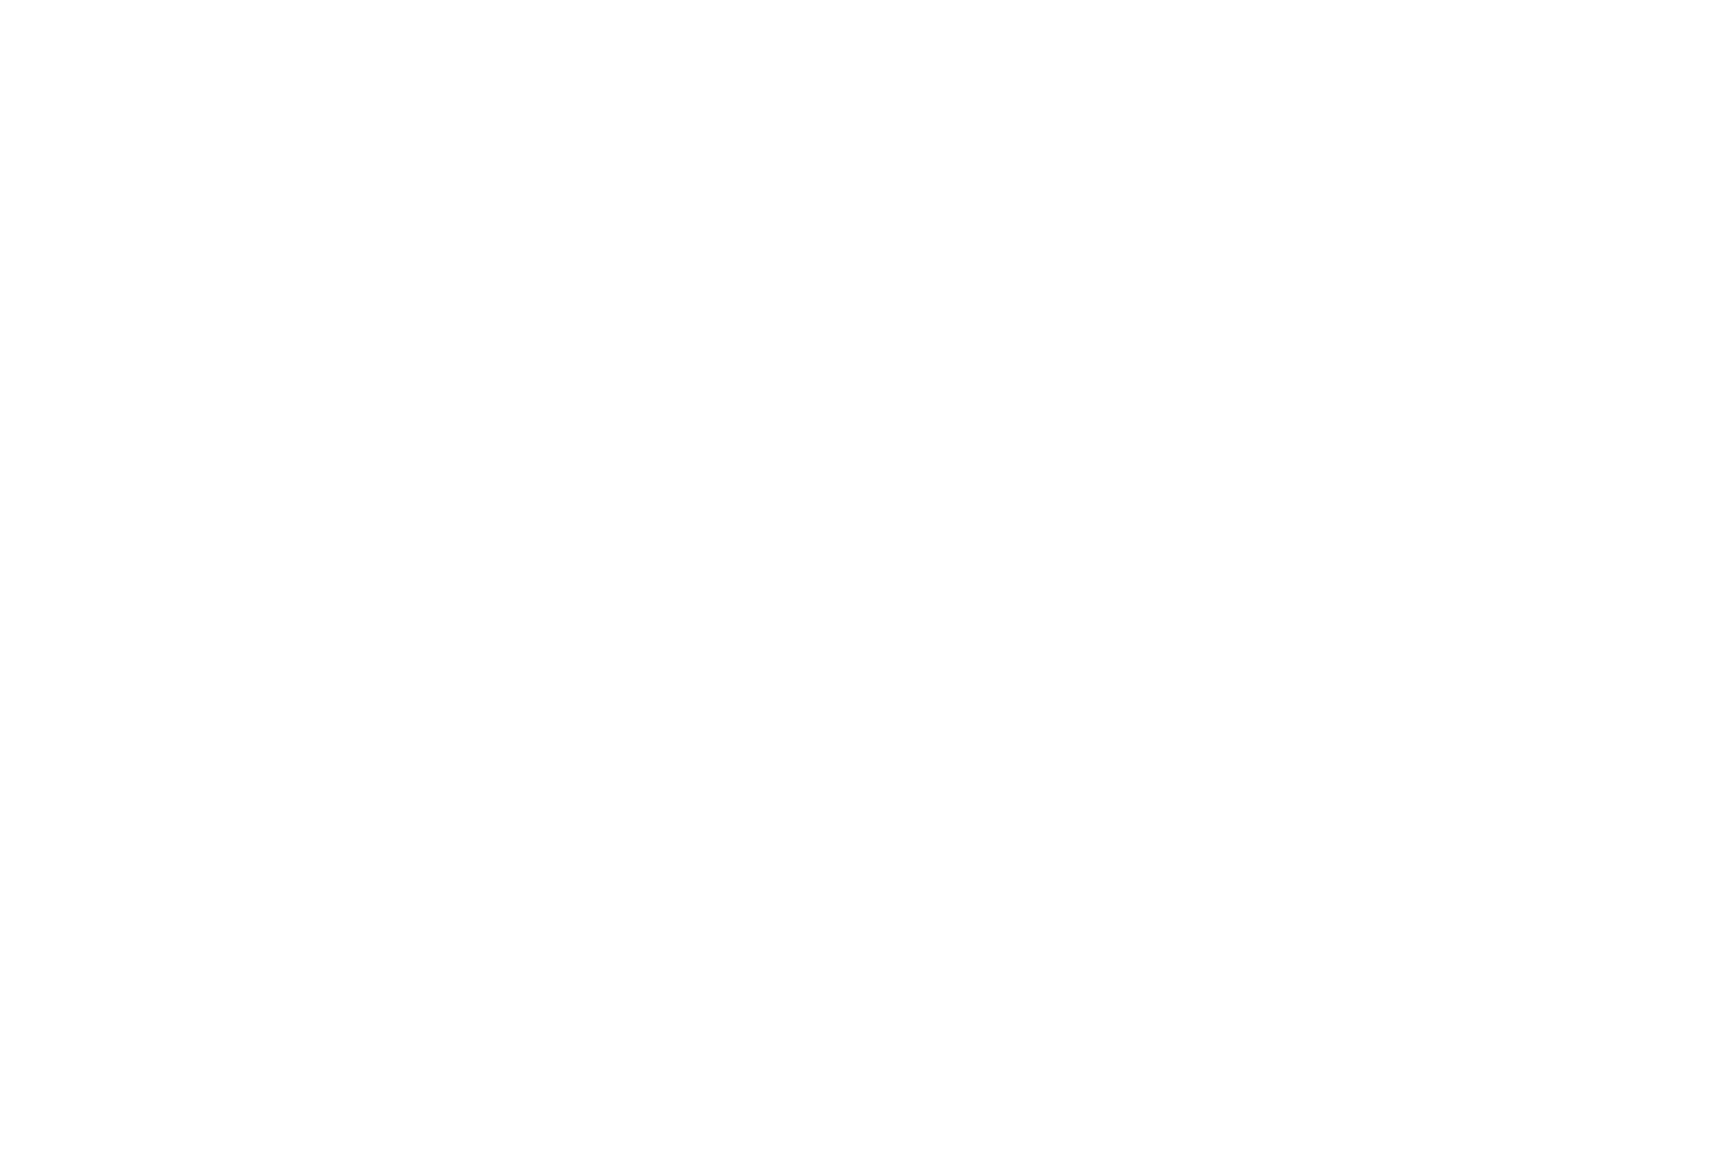 OFFICIAL SELECTION - Filmmatic Drama Screenplay Awards - 2020 (1)